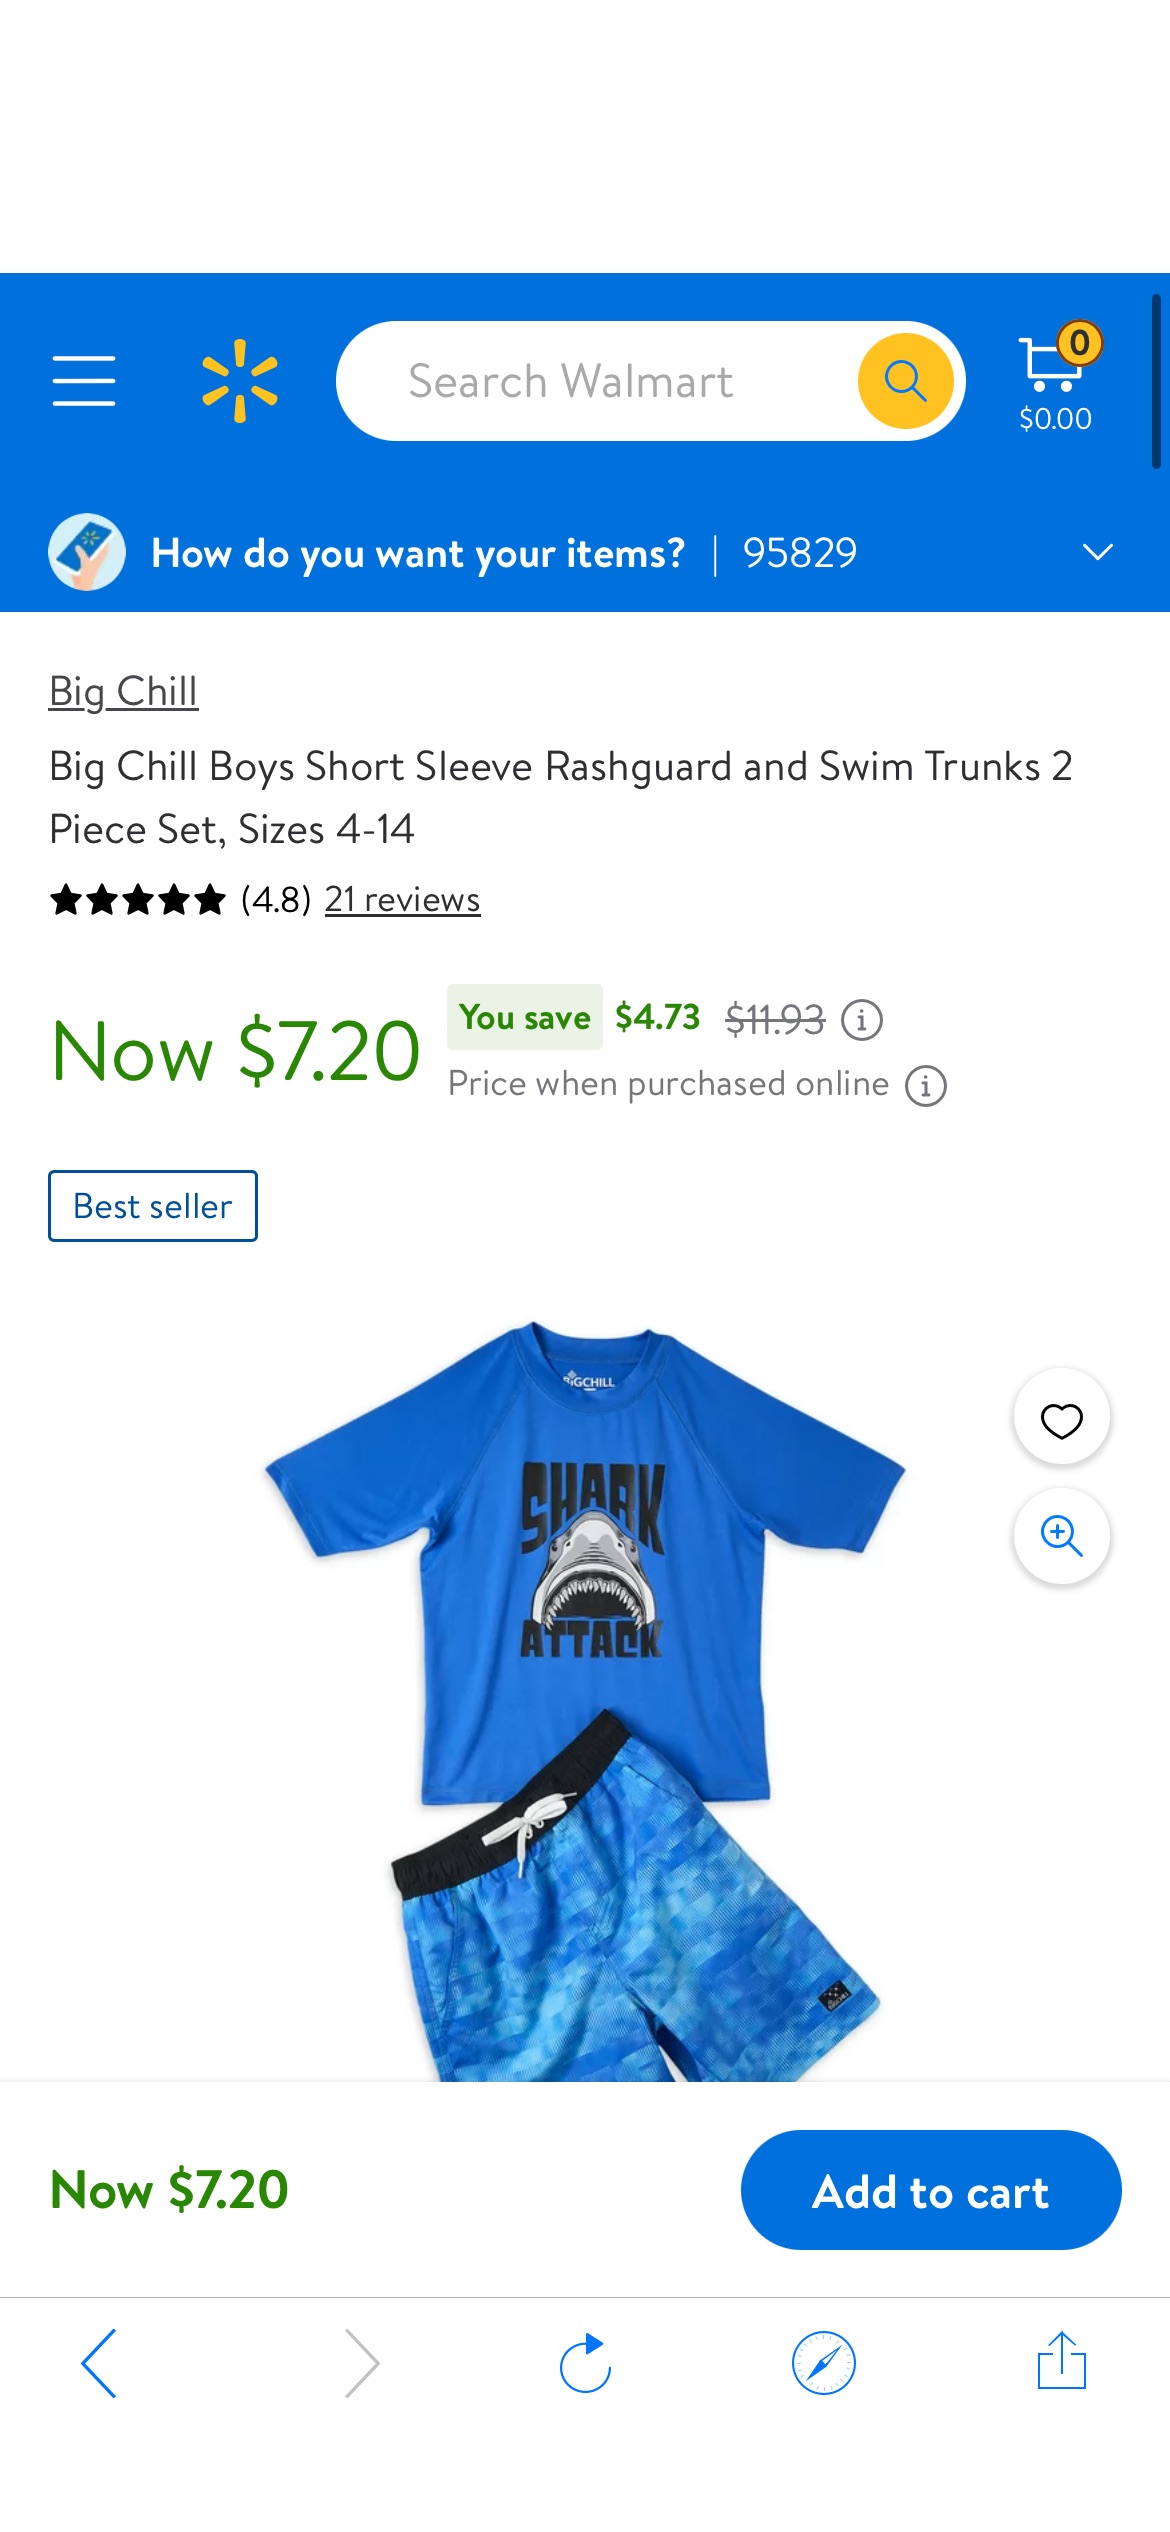 Big Chill Boys Short Sleeve Rashguard and Swim Trunks 2 Piece Set, Sizes 4-14 - Walmart.com男童泳衣